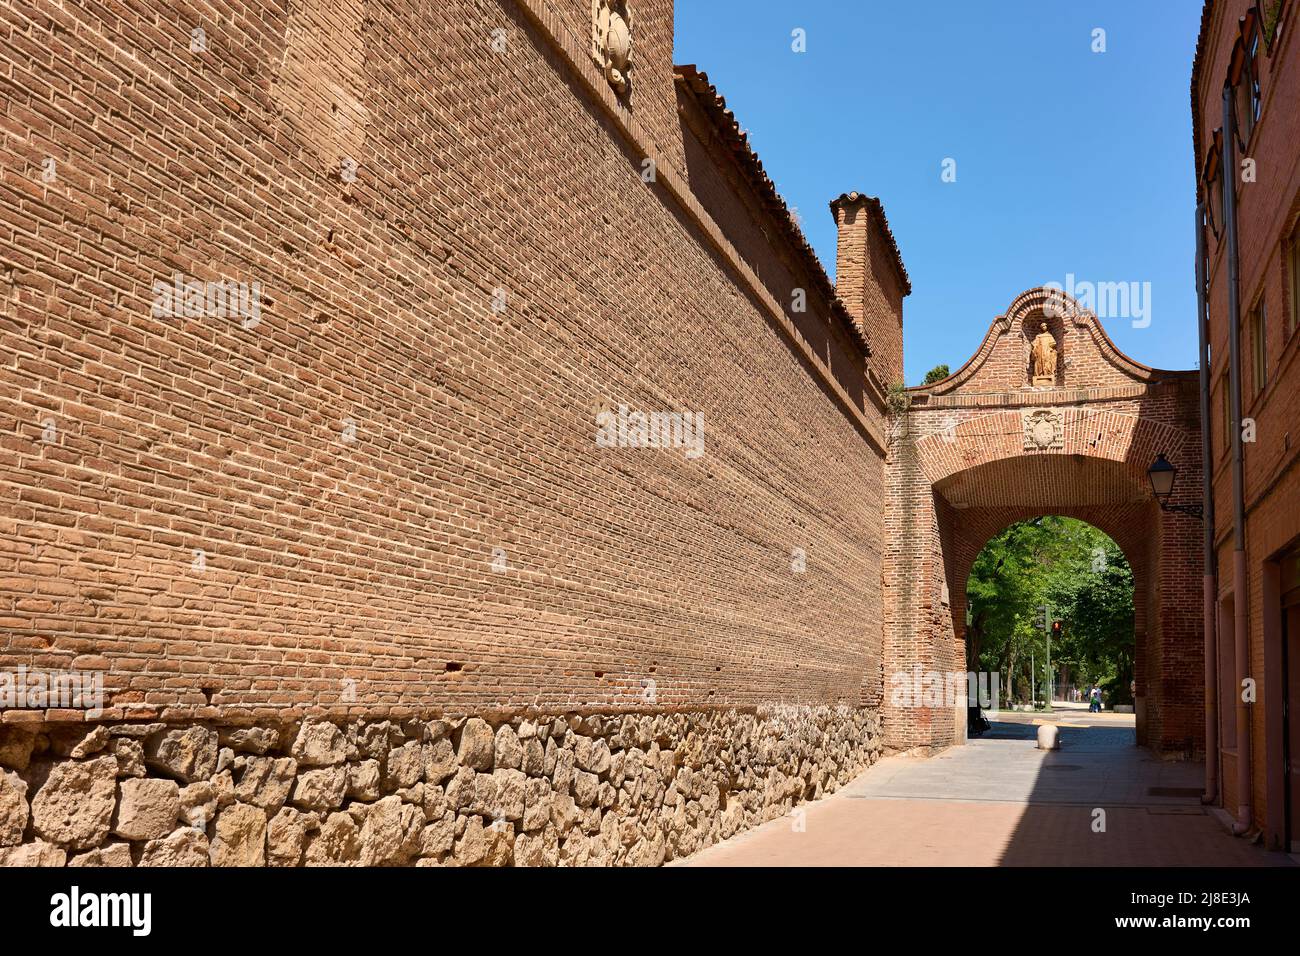 Arche de San Bernardo. Alcala de Henares, région de Madrid, Espagne. Banque D'Images